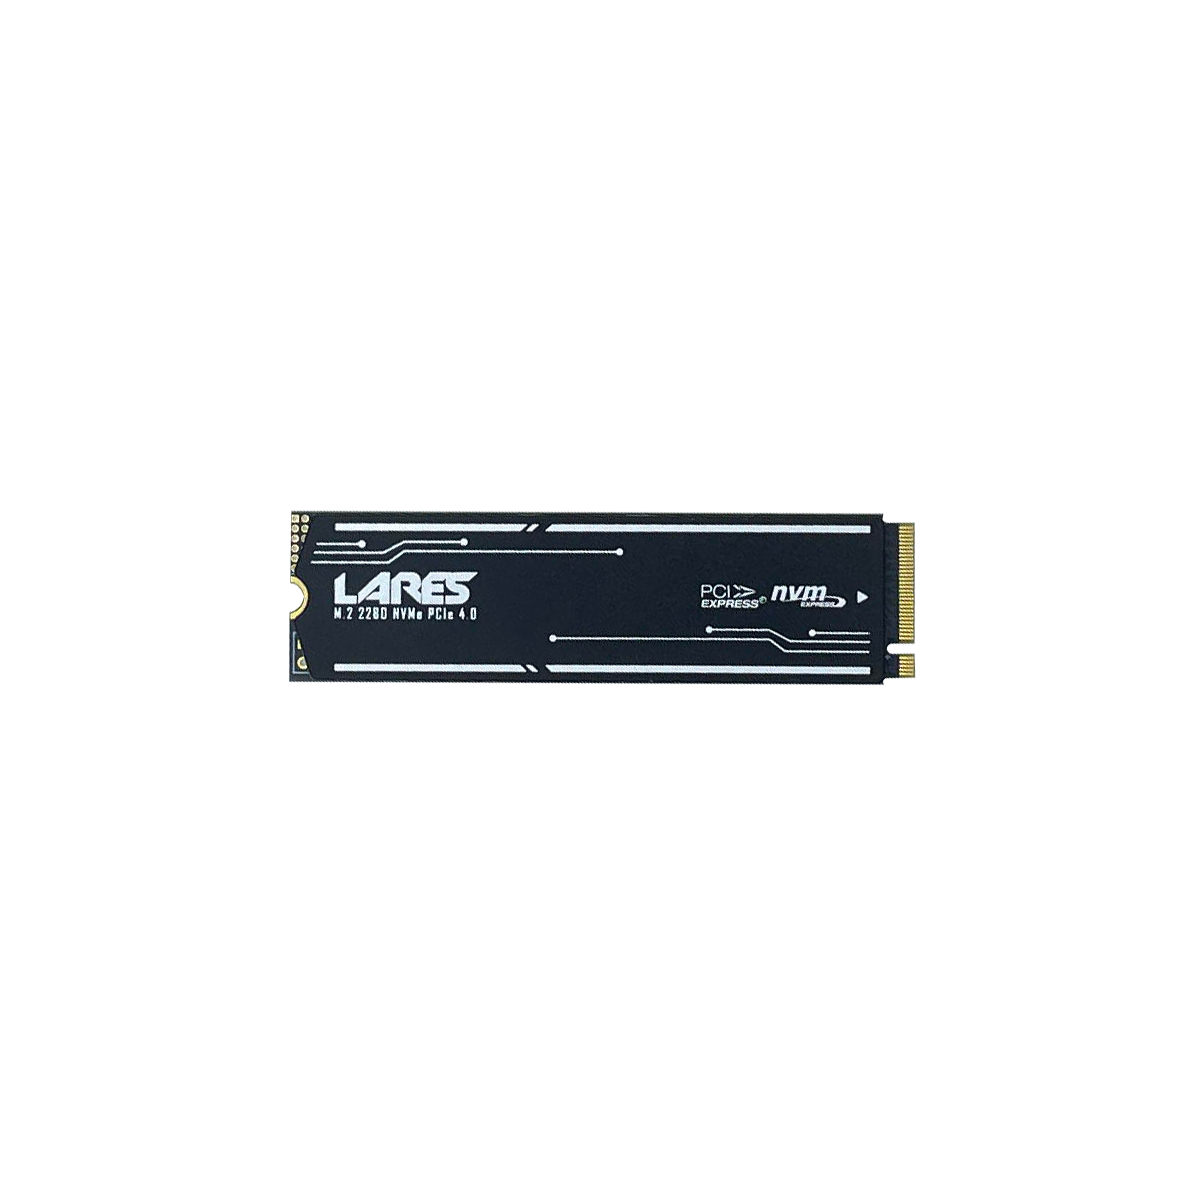 JP600-M.2 NVMe PCIe 3.0 Capacity｜128GB｜256GB｜512GB｜1TB